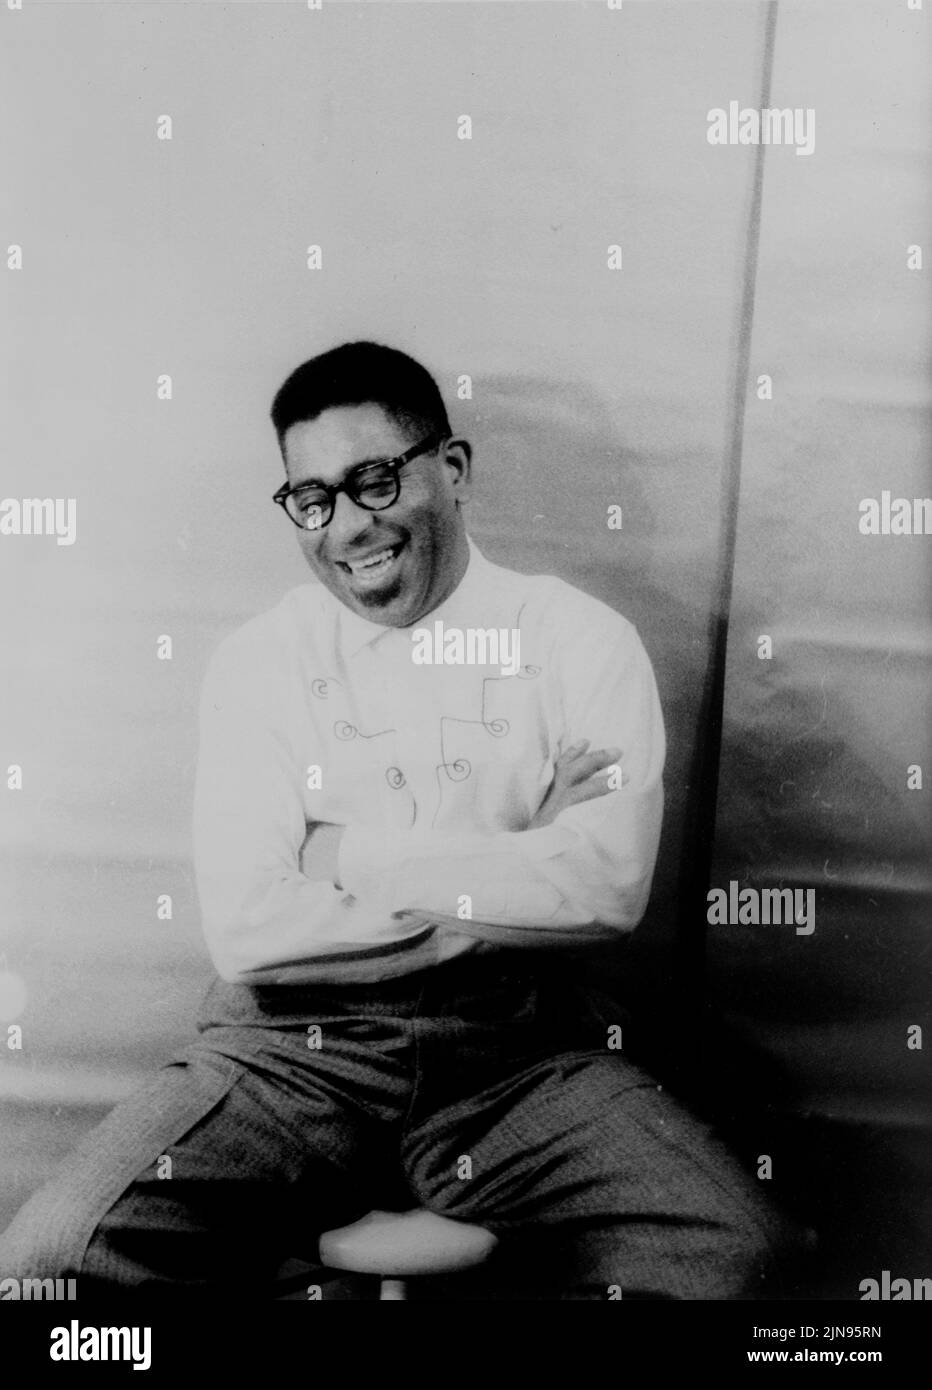 USA -- 02 Dec 1955 -- Portrait of the jazz musician Dizzy Gillespie ( John Birks 1917-1993 ) -- Picture by Carl van Vechten/Atlas Photo Archive Stock Photo